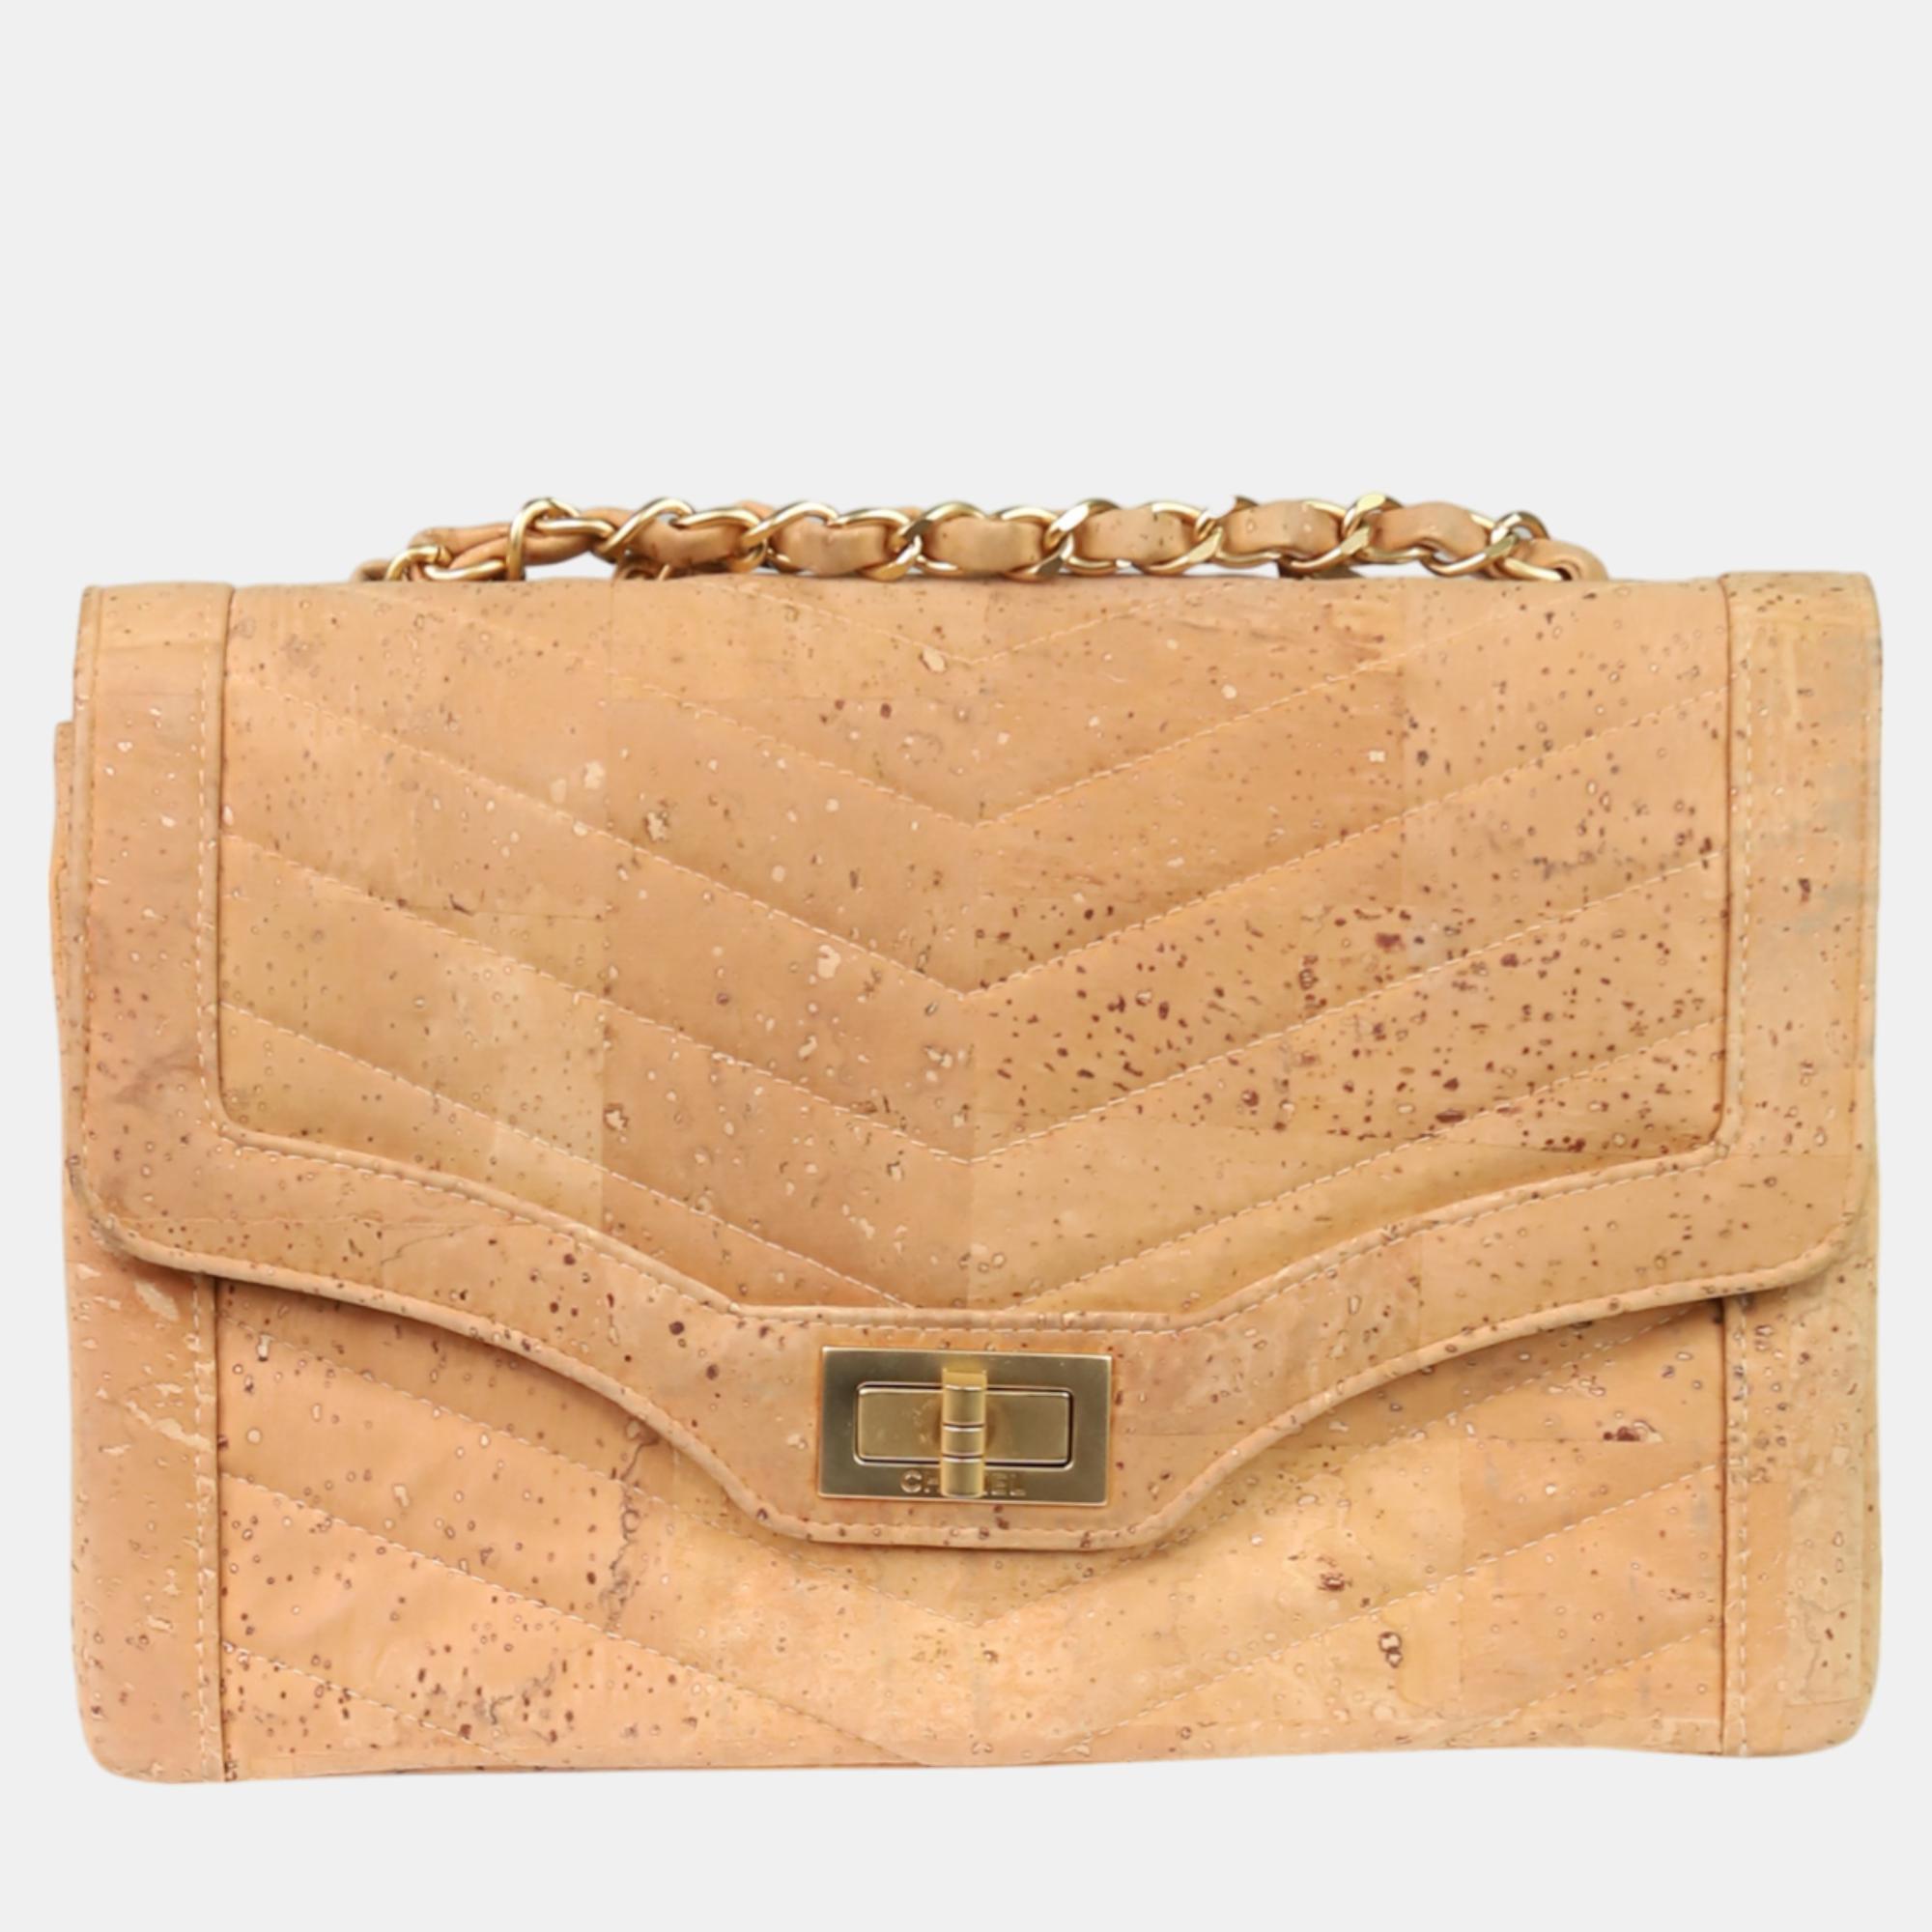 Chanel brown vintage reissue cork chevron flap bag